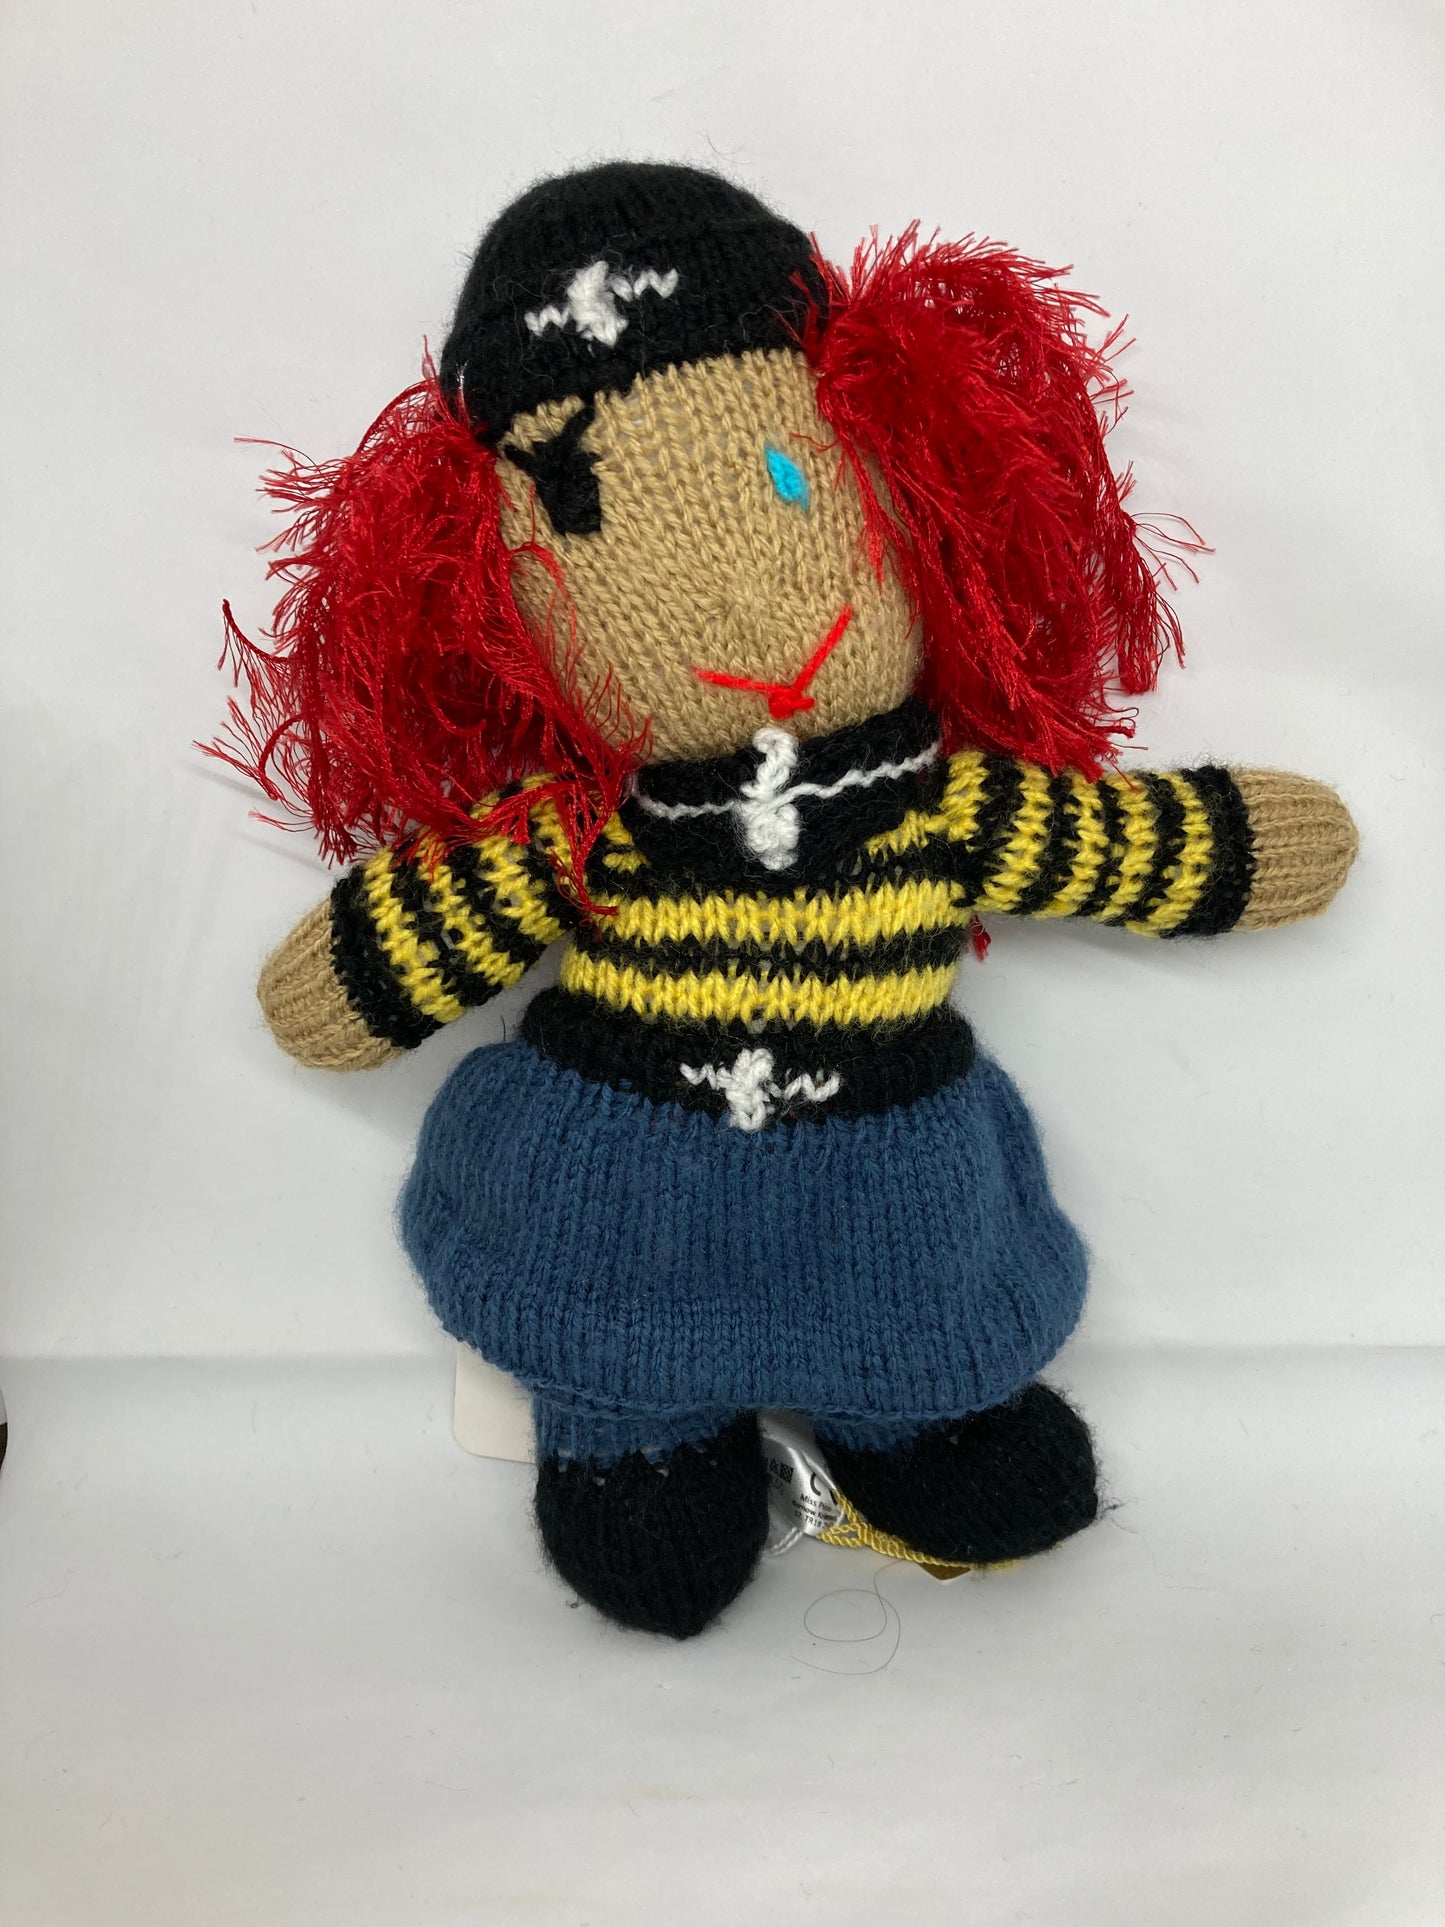 Miss Pirate